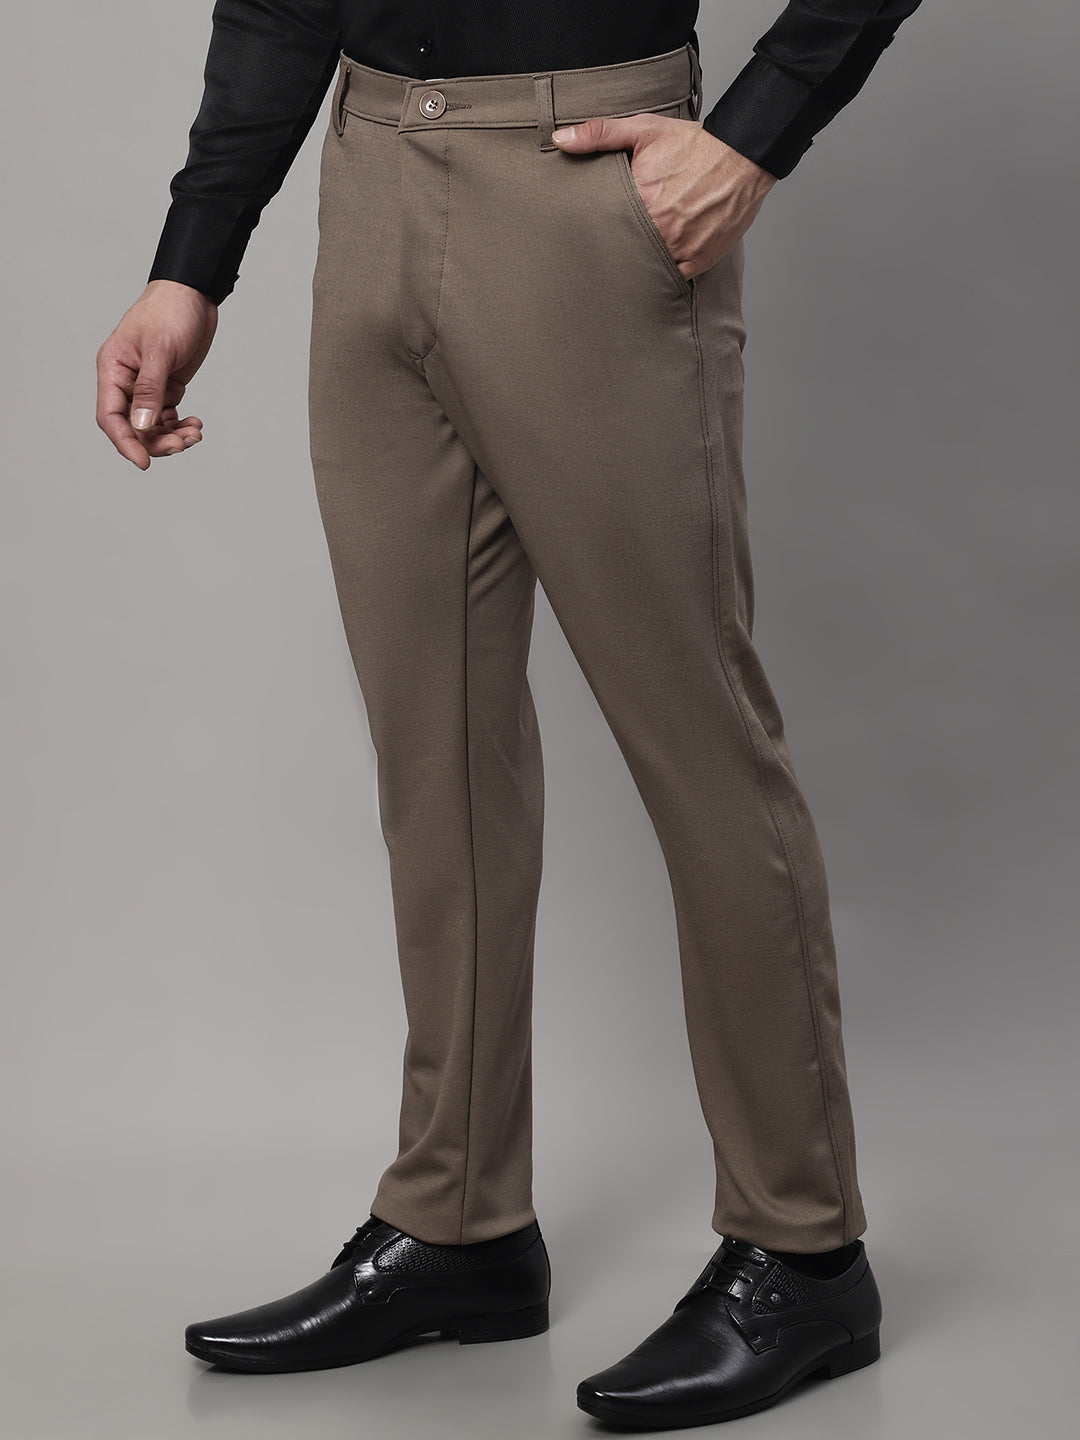 Jainish Men's Dark-Beige Tapered Fit Formal Trousers